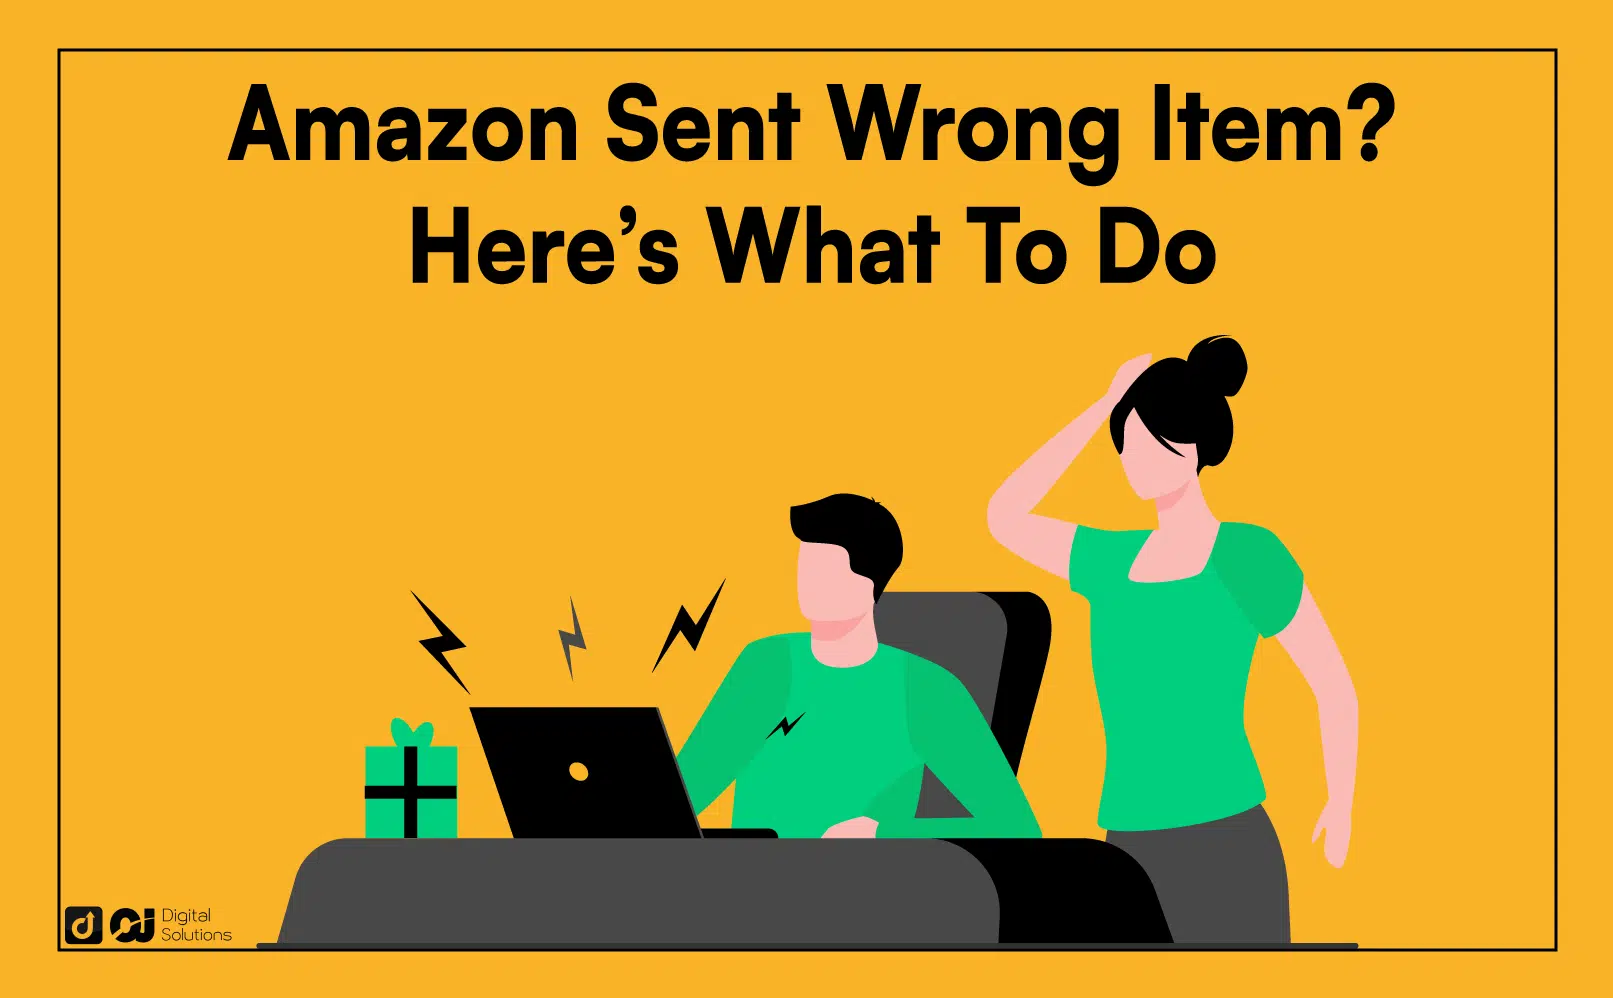 Amazon order mistake - wide 7